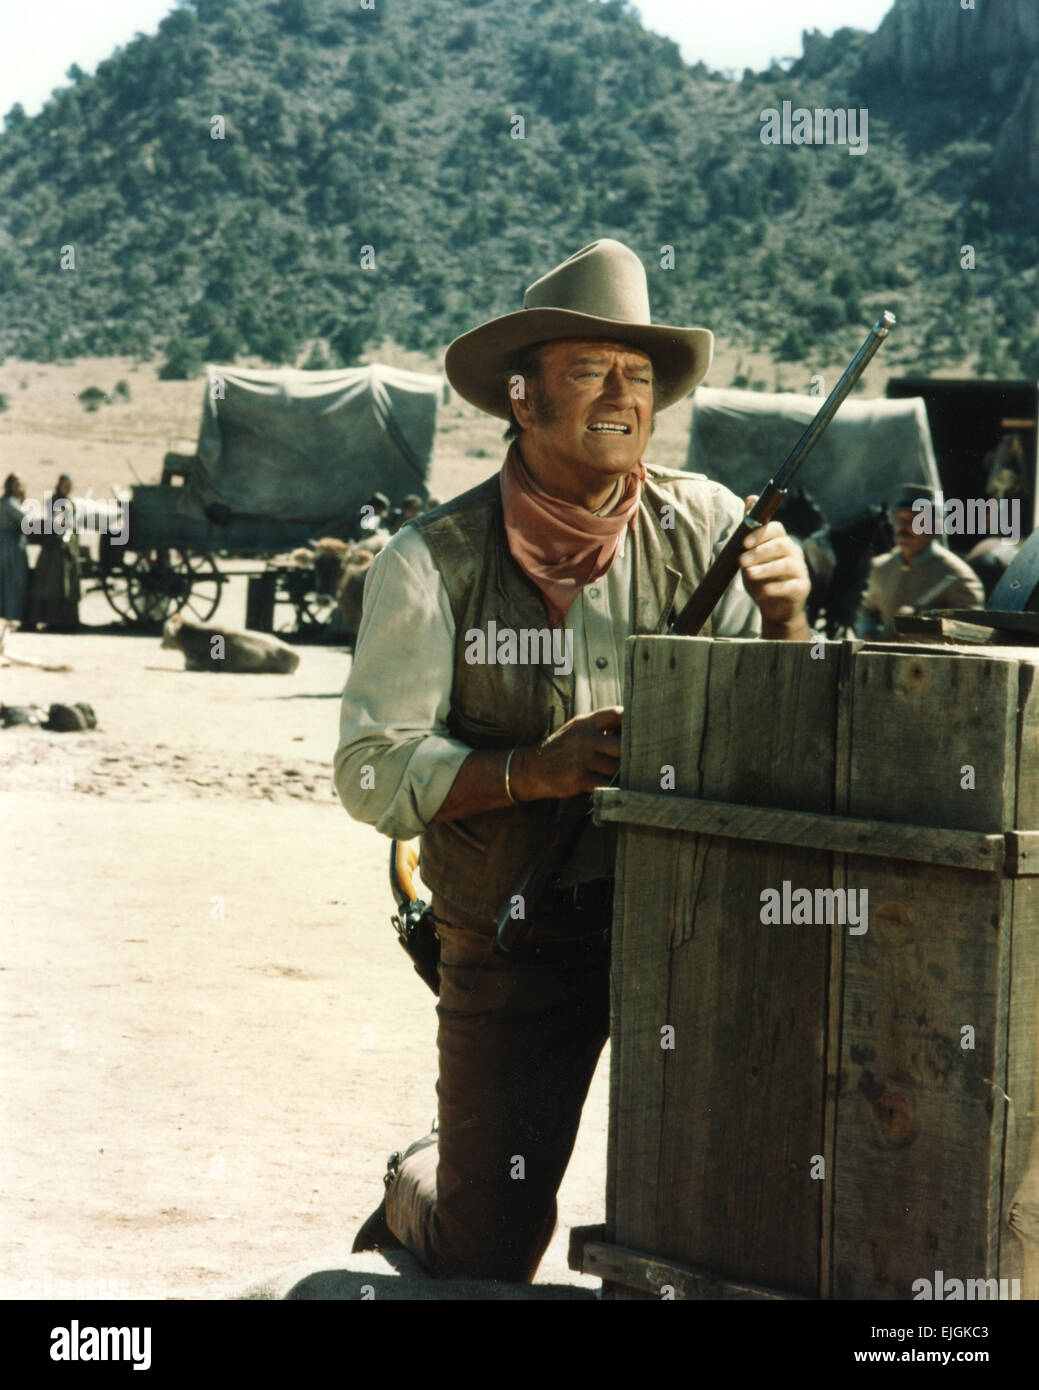 Famous Cowboy Actor Fotos e Imágenes de stock - Alamy